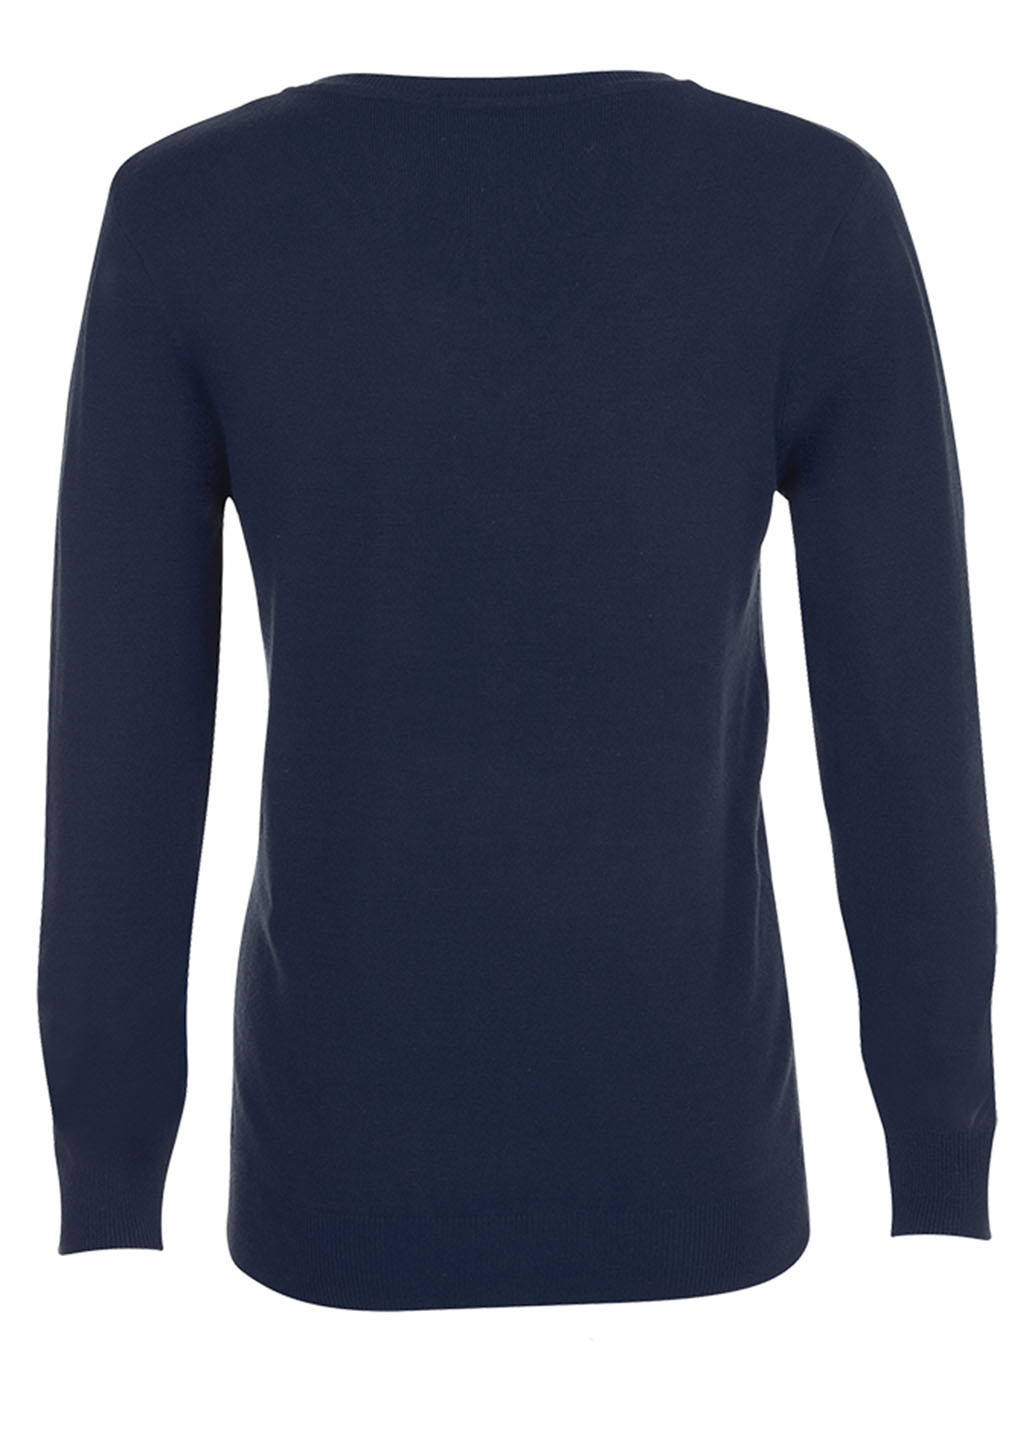 Темно-синий демисезонный пуловер пуловер Sol's